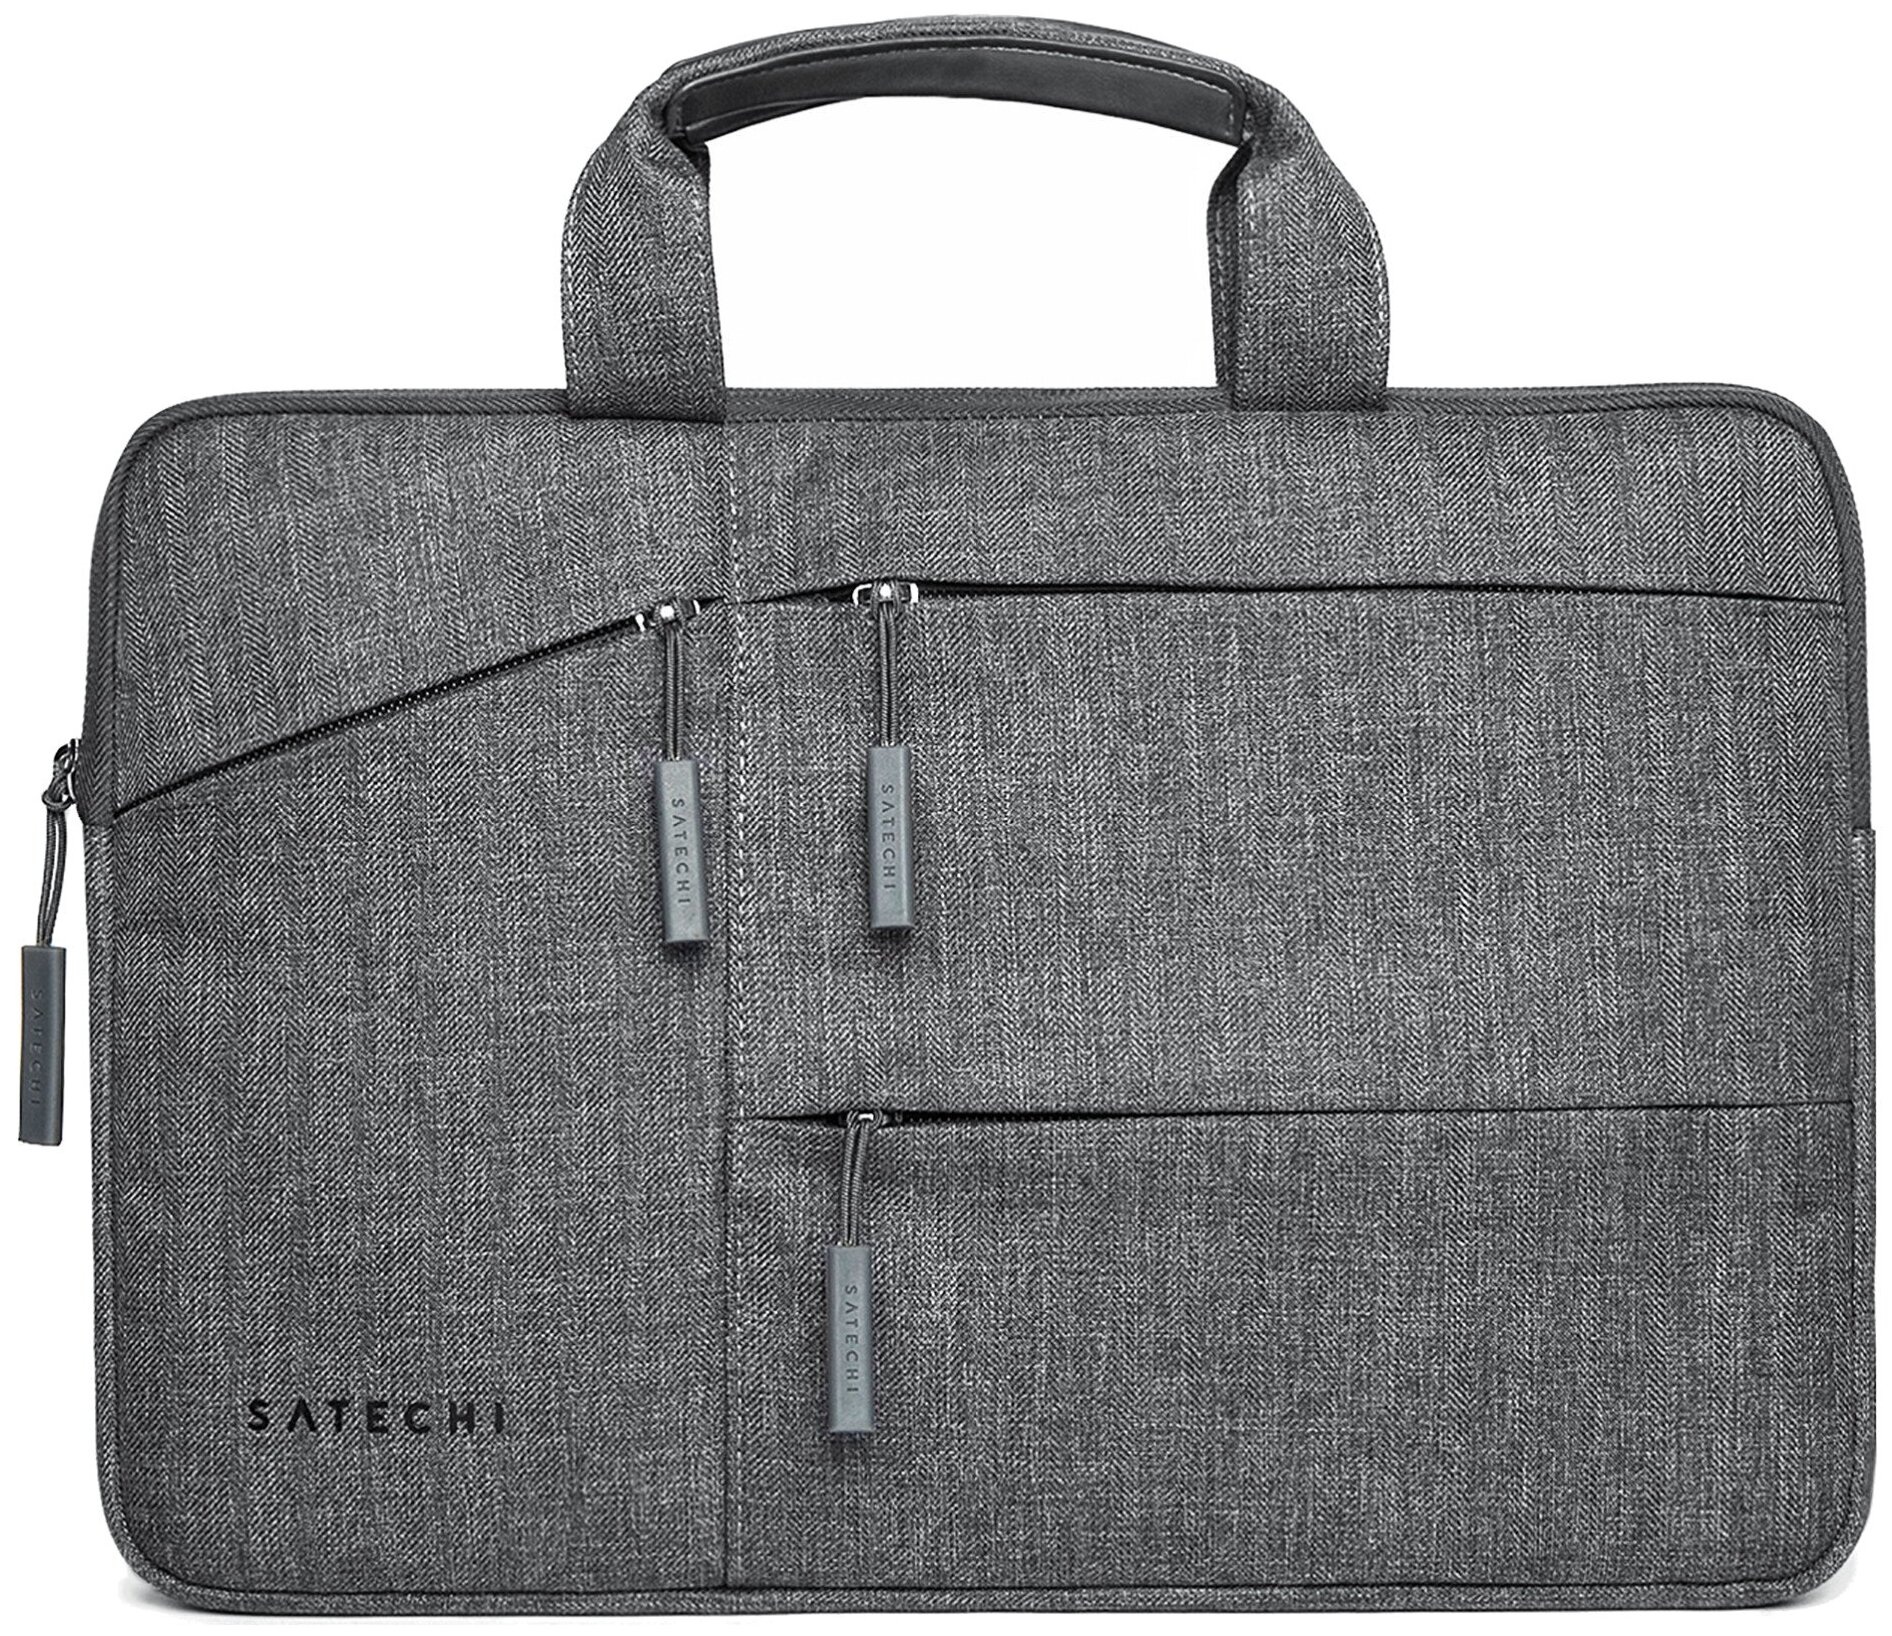 Сумка для ноутбука 16 Satechi Water-Resistant Laptop Carrying Case w/ Pockets серый (ST-LTB15)